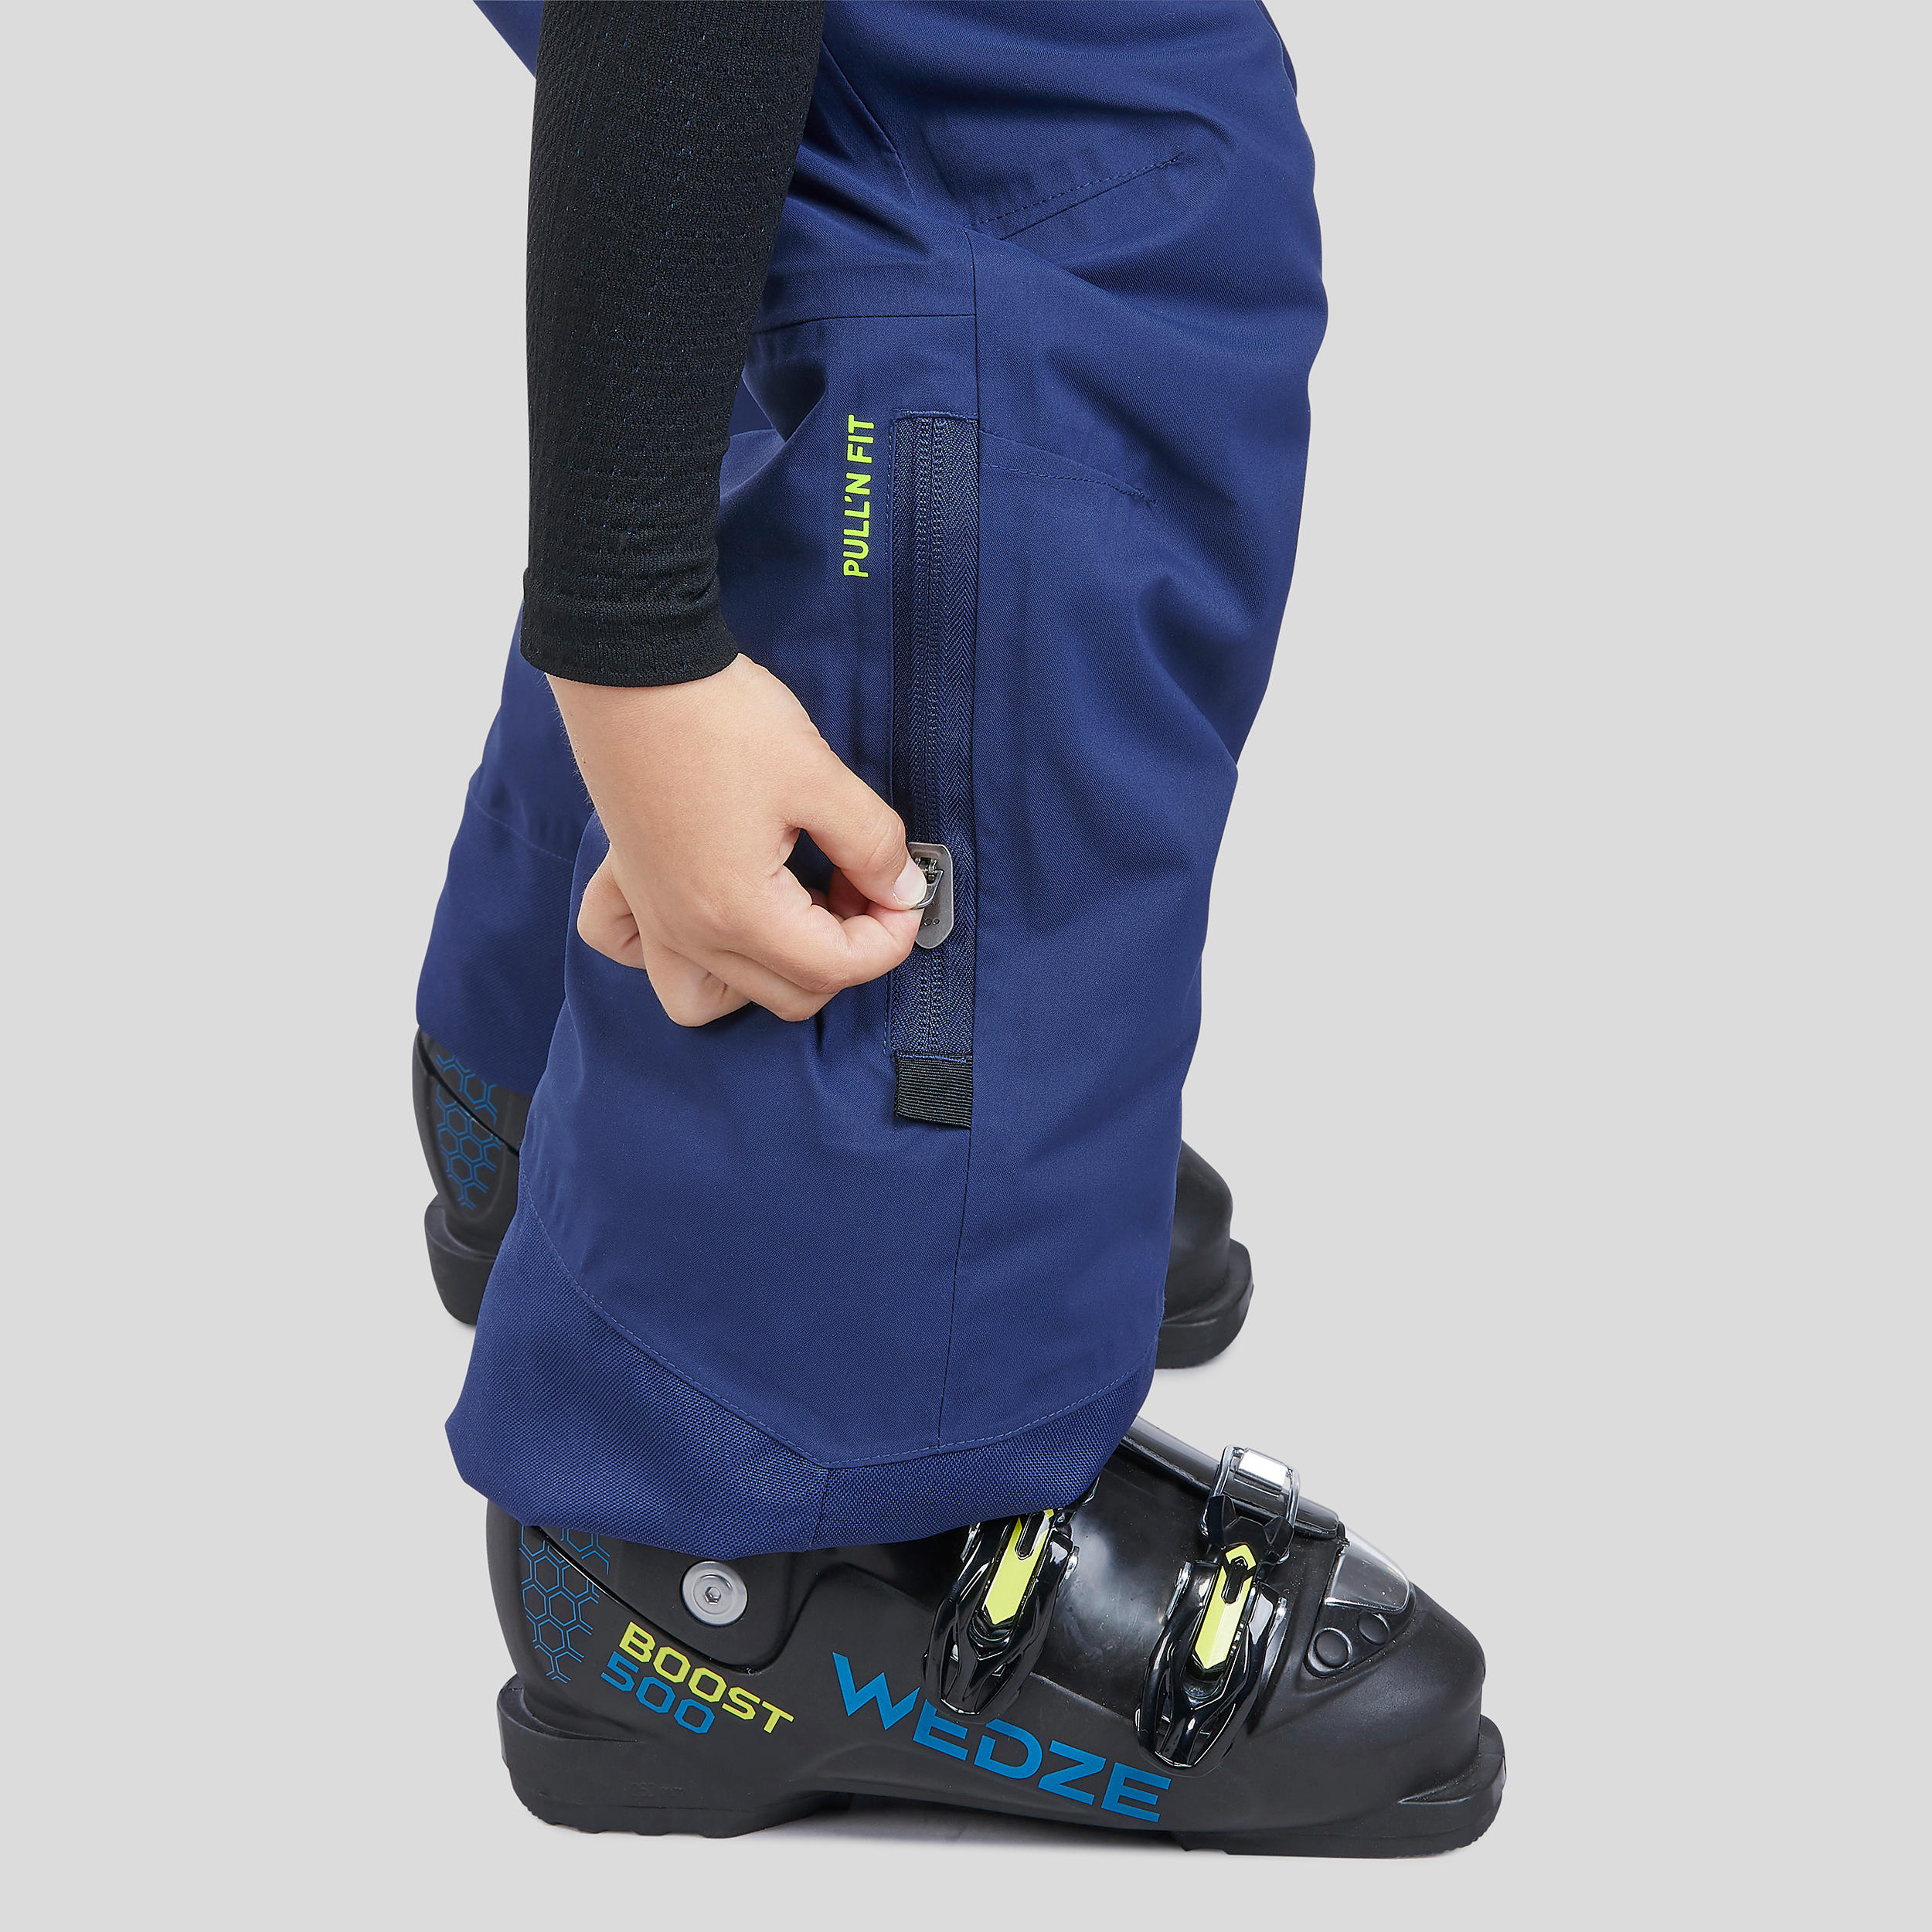 Kids' Ski Pants - PA 900 PNF Blue - Galaxy blue - Wedze - Decathlon